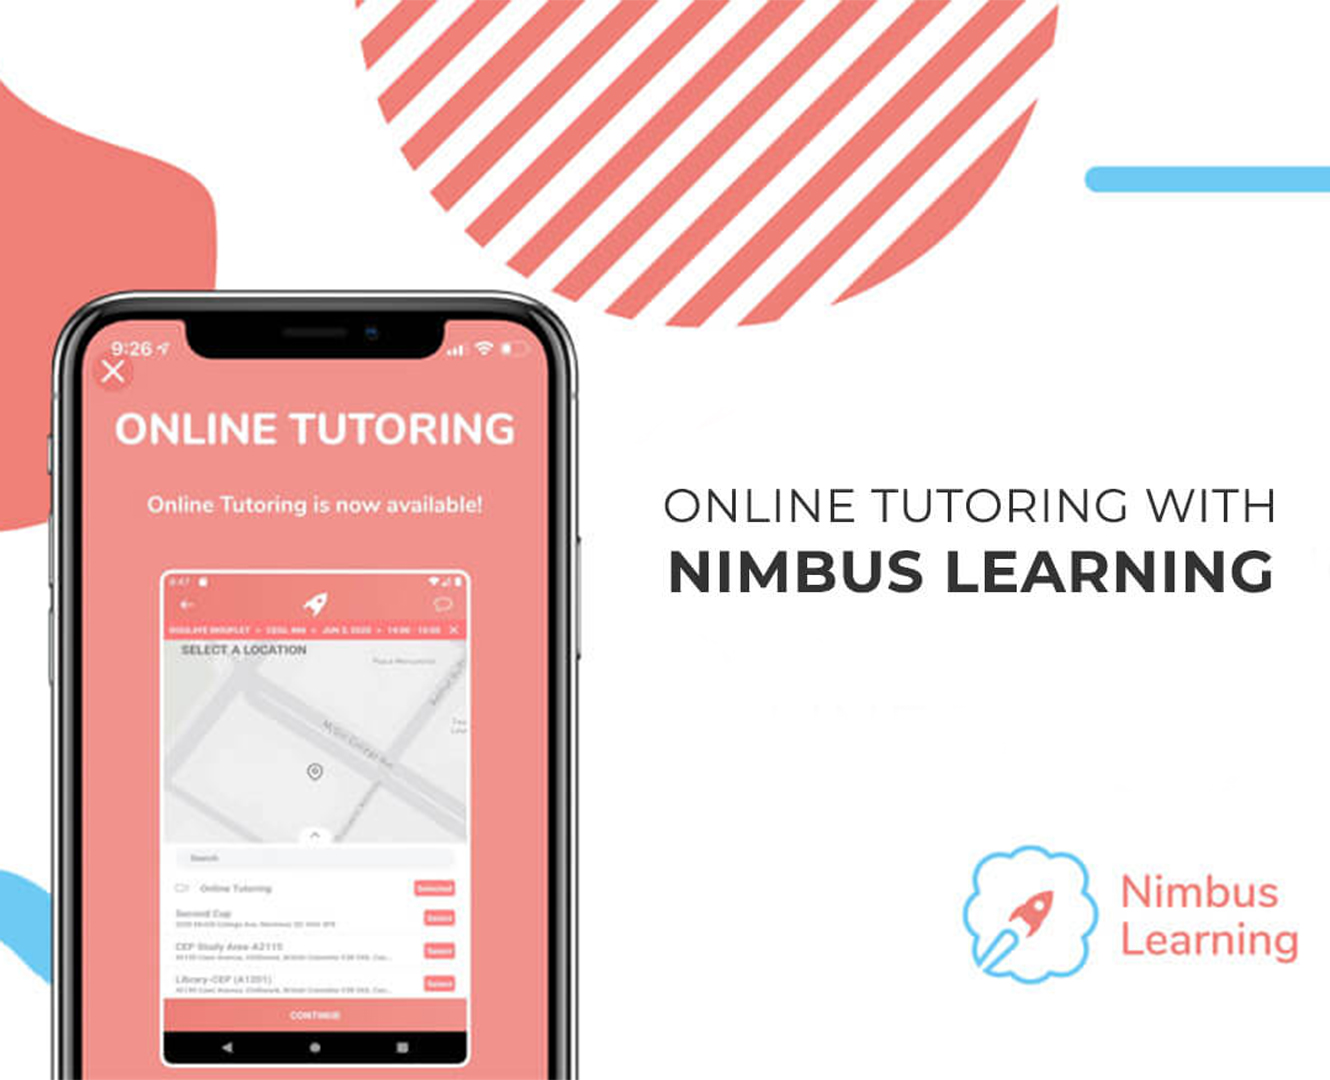 Nimbus learning platform shown on iPhone